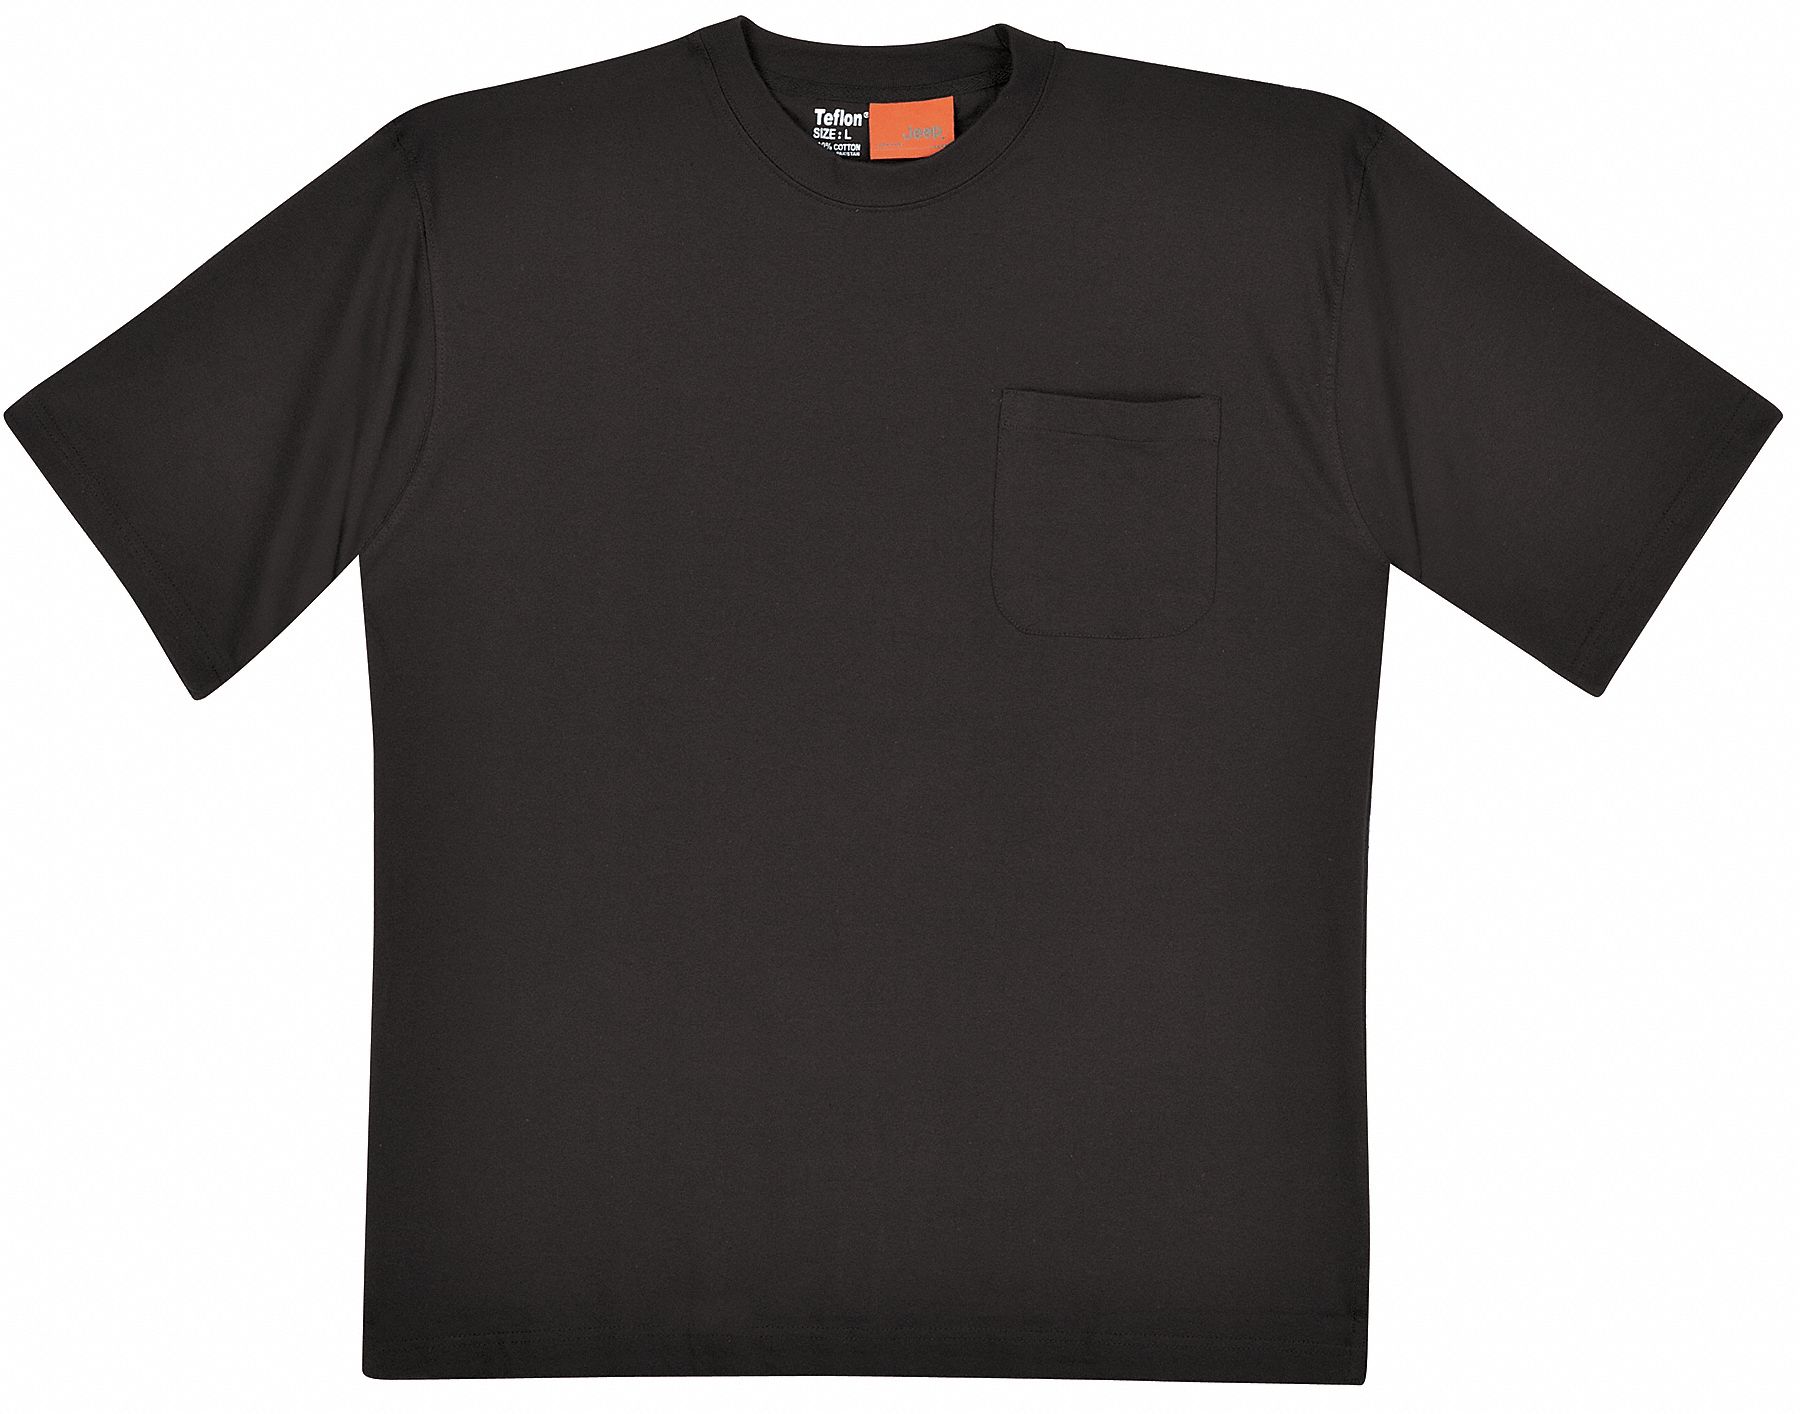 T-Shirt, Cotton, DuPont(TM) Teflon® fabric protector, Black, Pullover ...